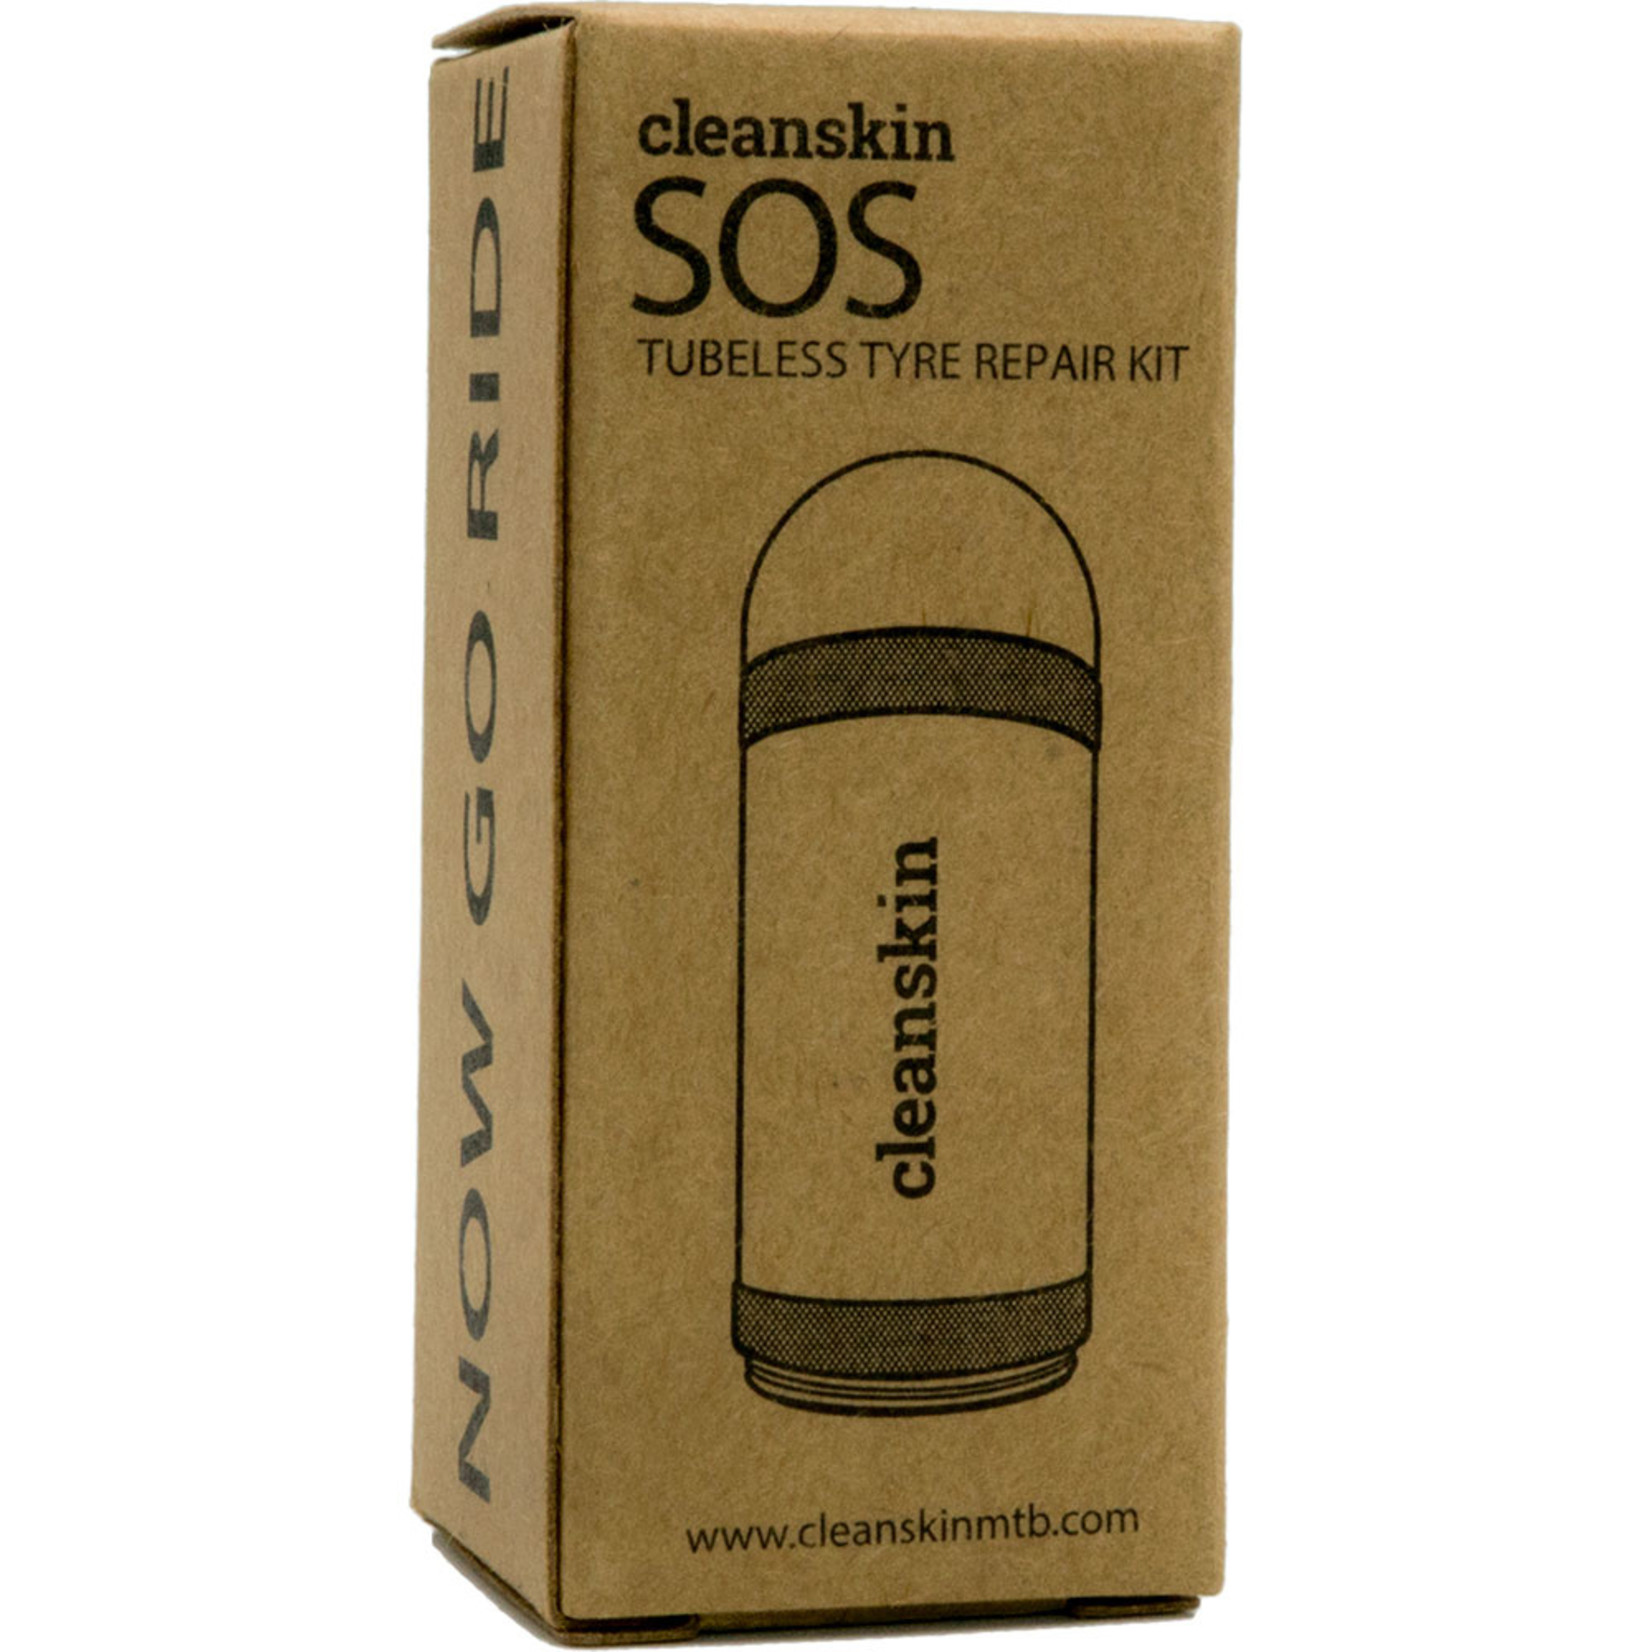 Cleanskin Cleanskin, SOS Tubeless Tyre Repair Kit